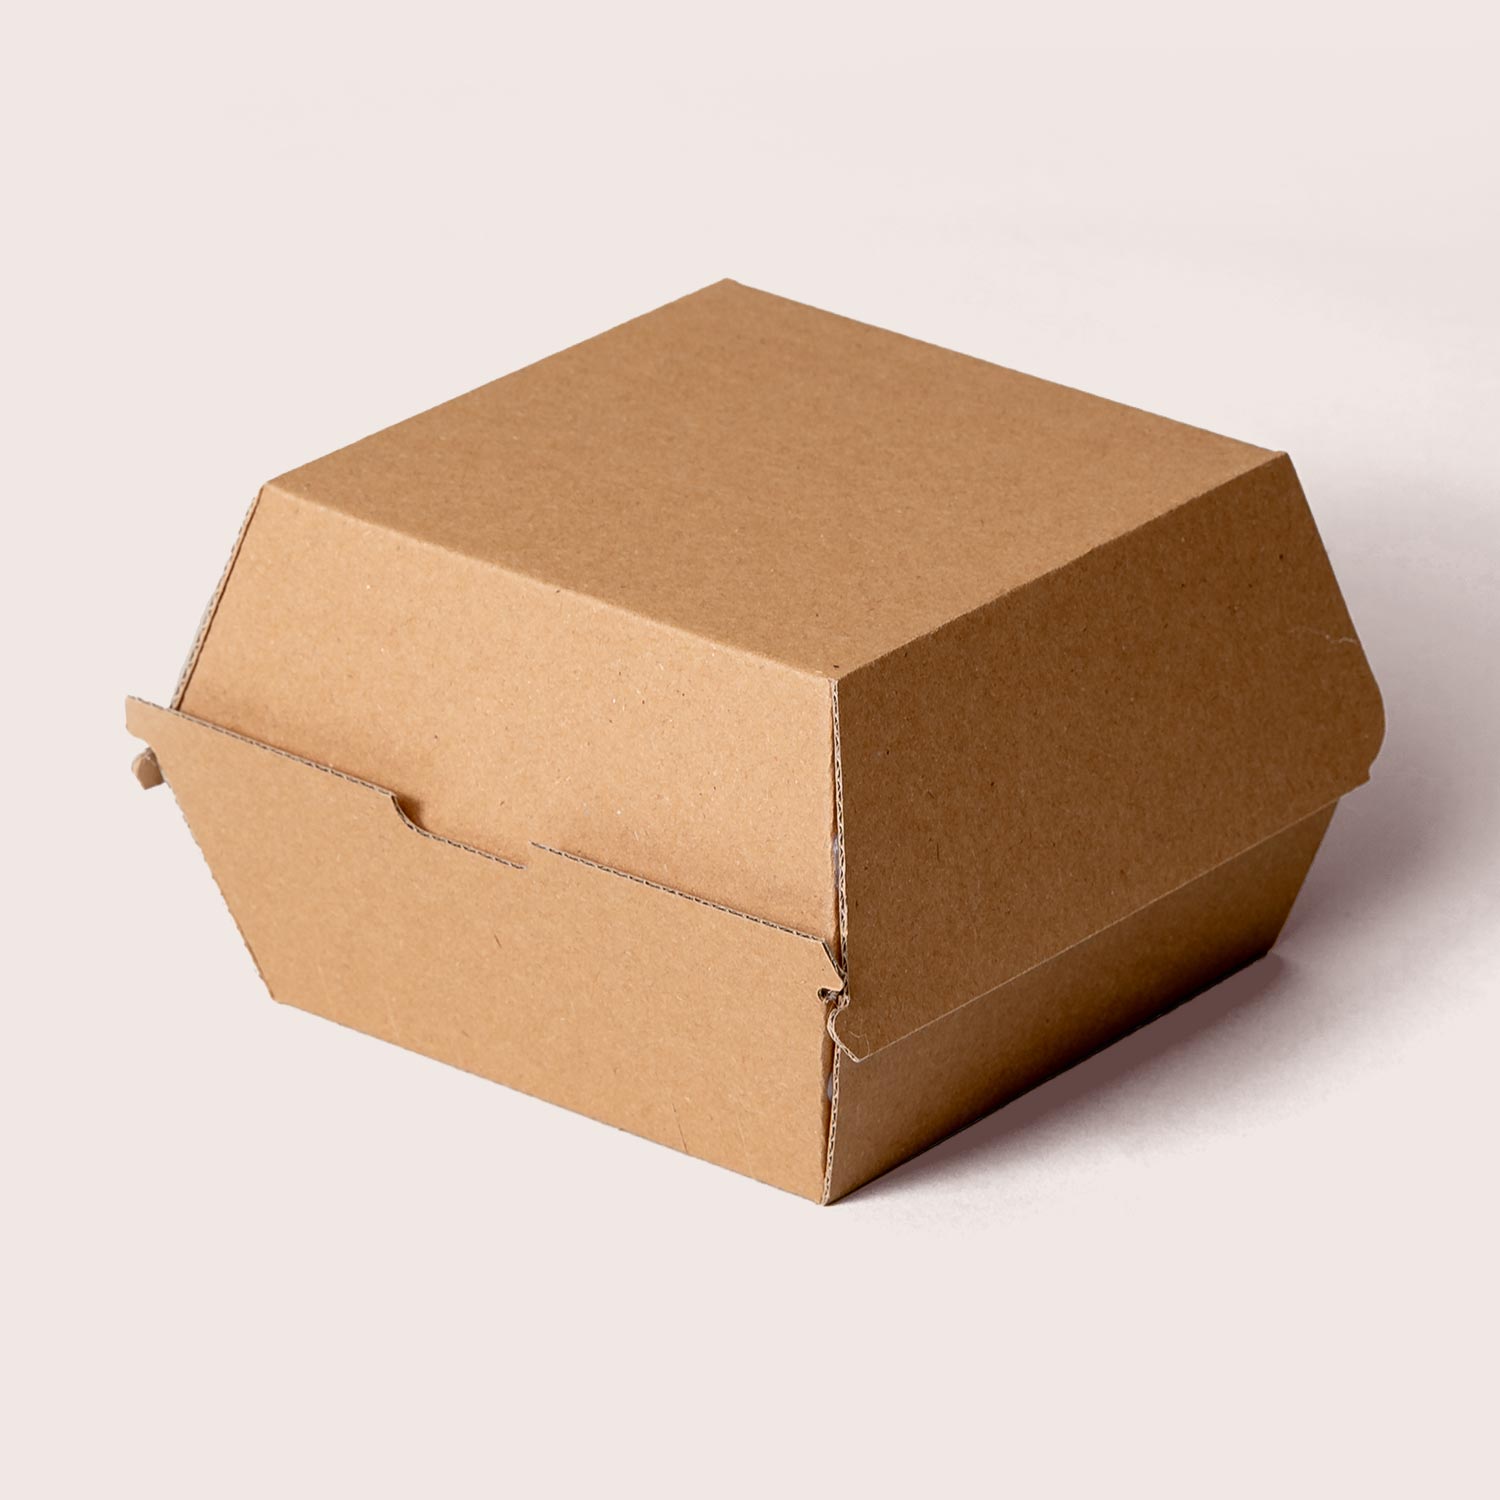 Burger packaging made of corrugated cardboard